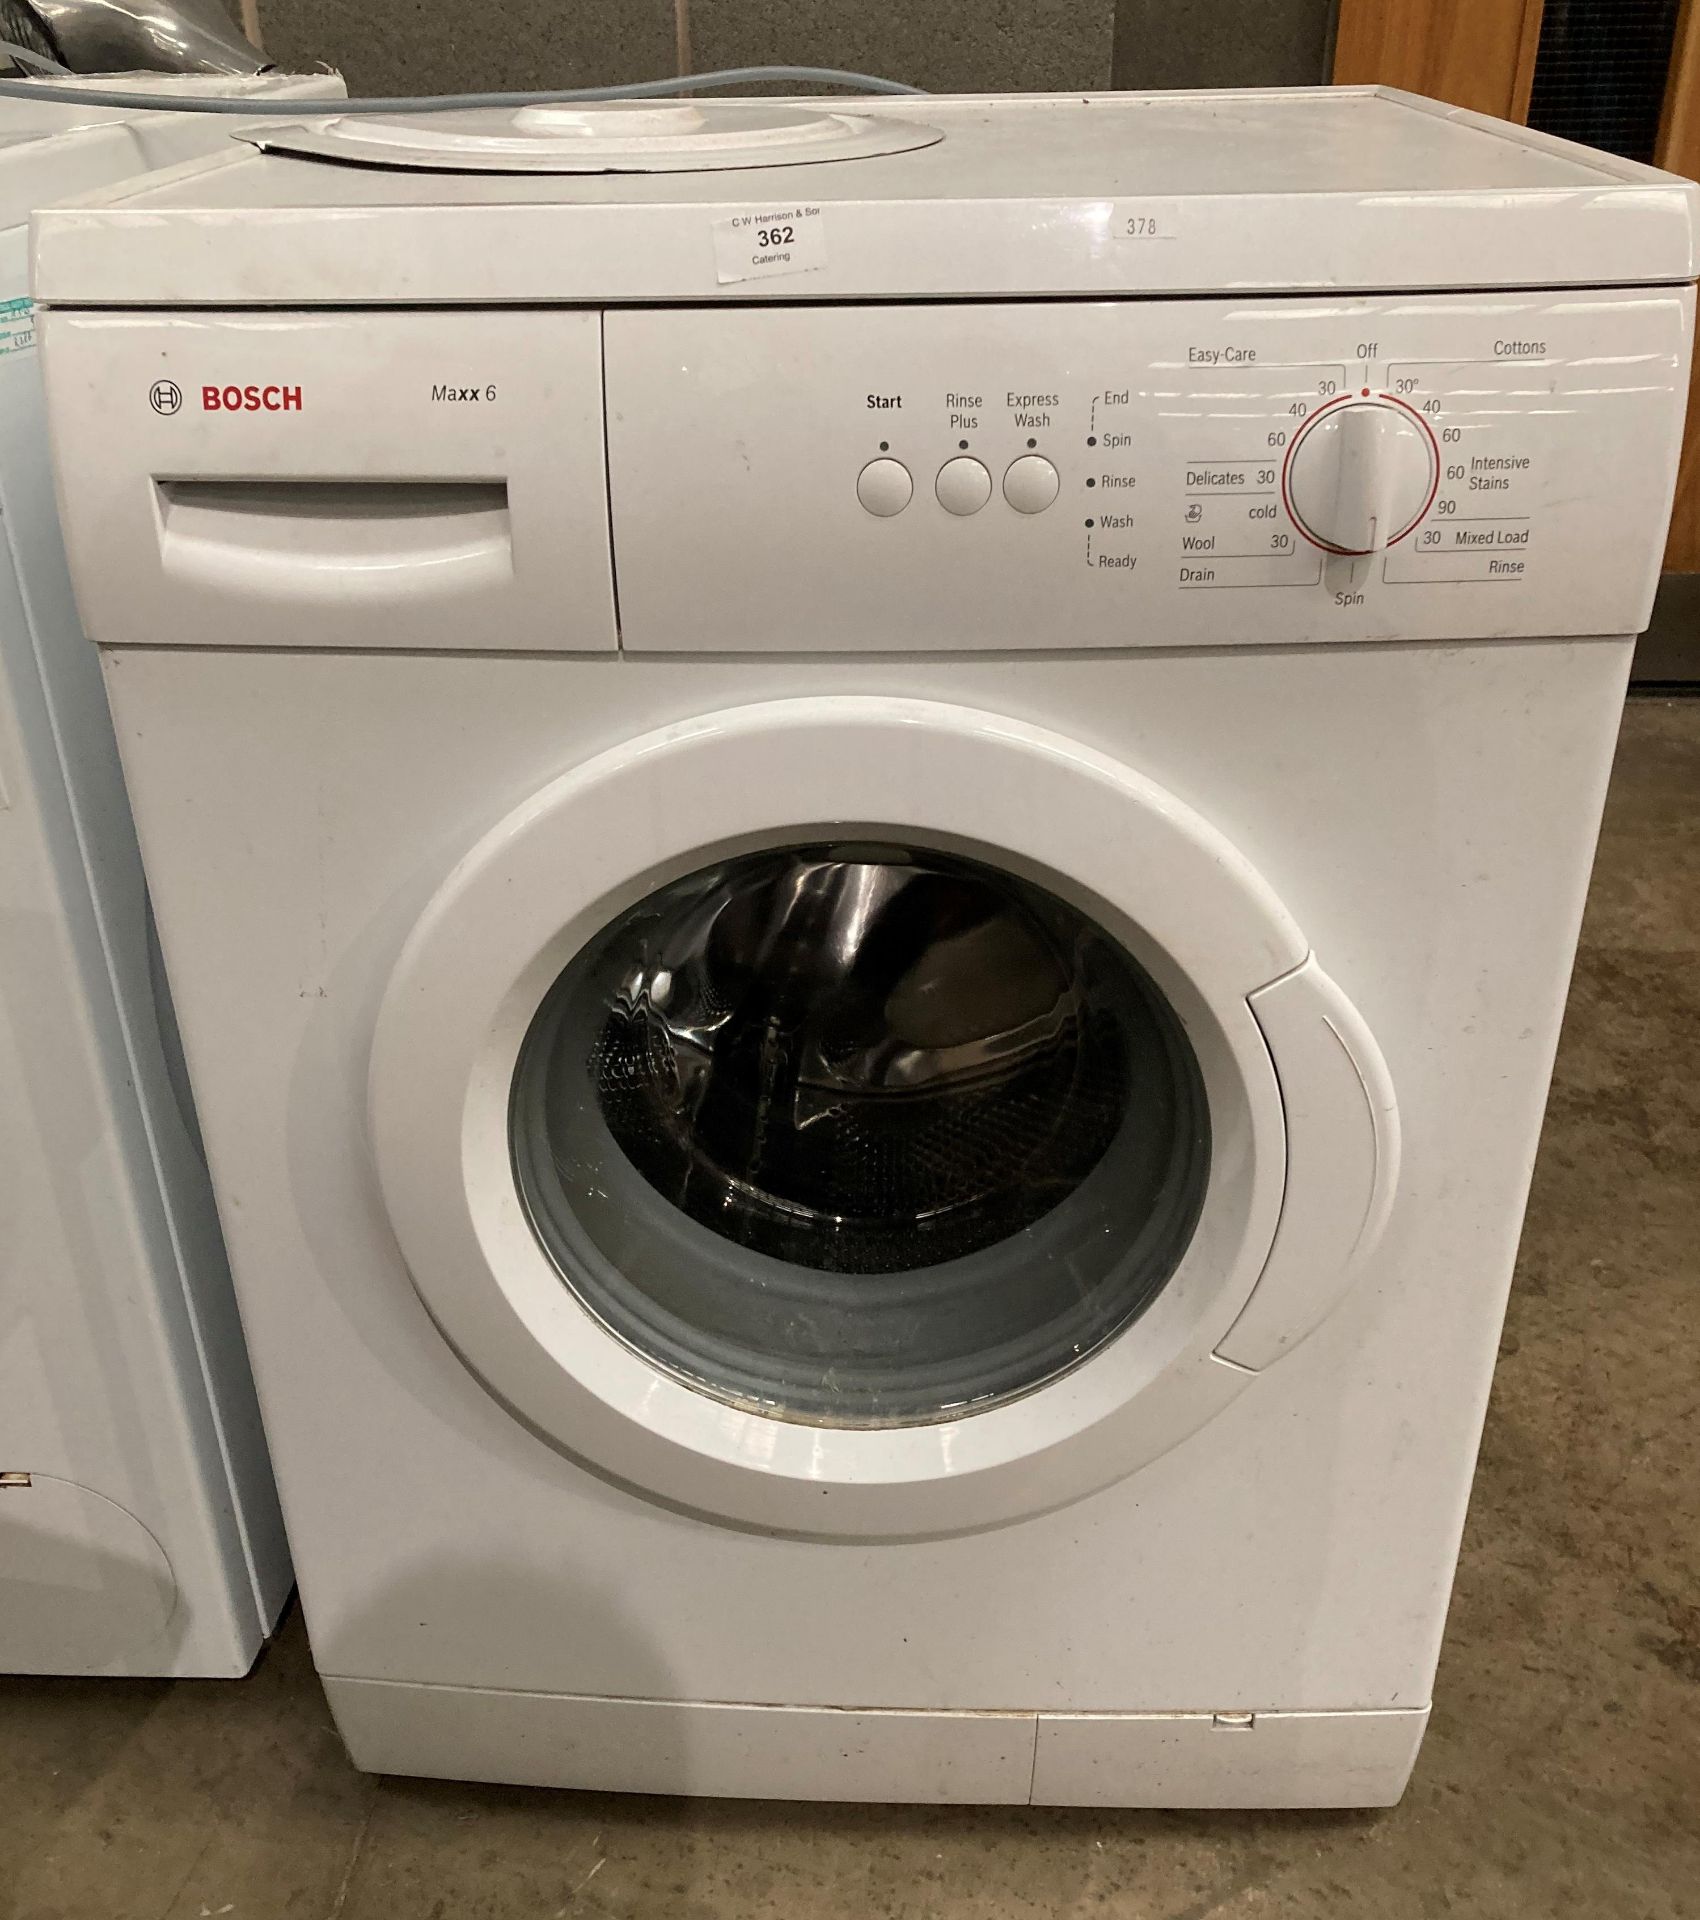 A Bosch Maxx 6 automatic washing machine (rear panel loose) (saleroom location: KITCHEN)